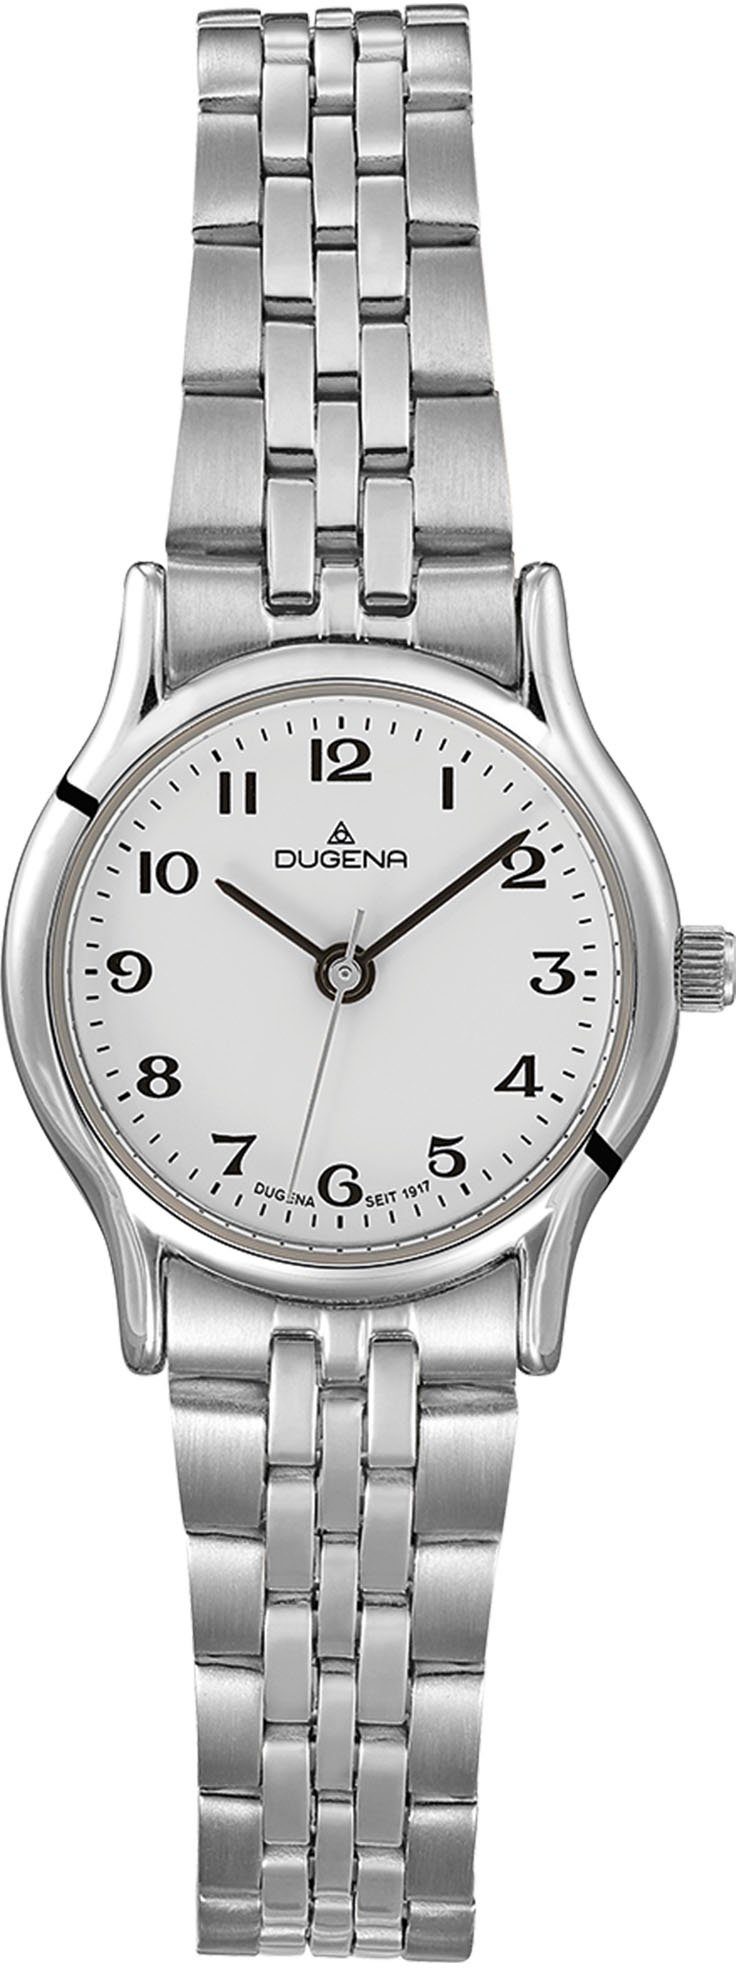 Dugena Quarzuhr Vintage, 4461110, Armbanduhr, Damenuhr